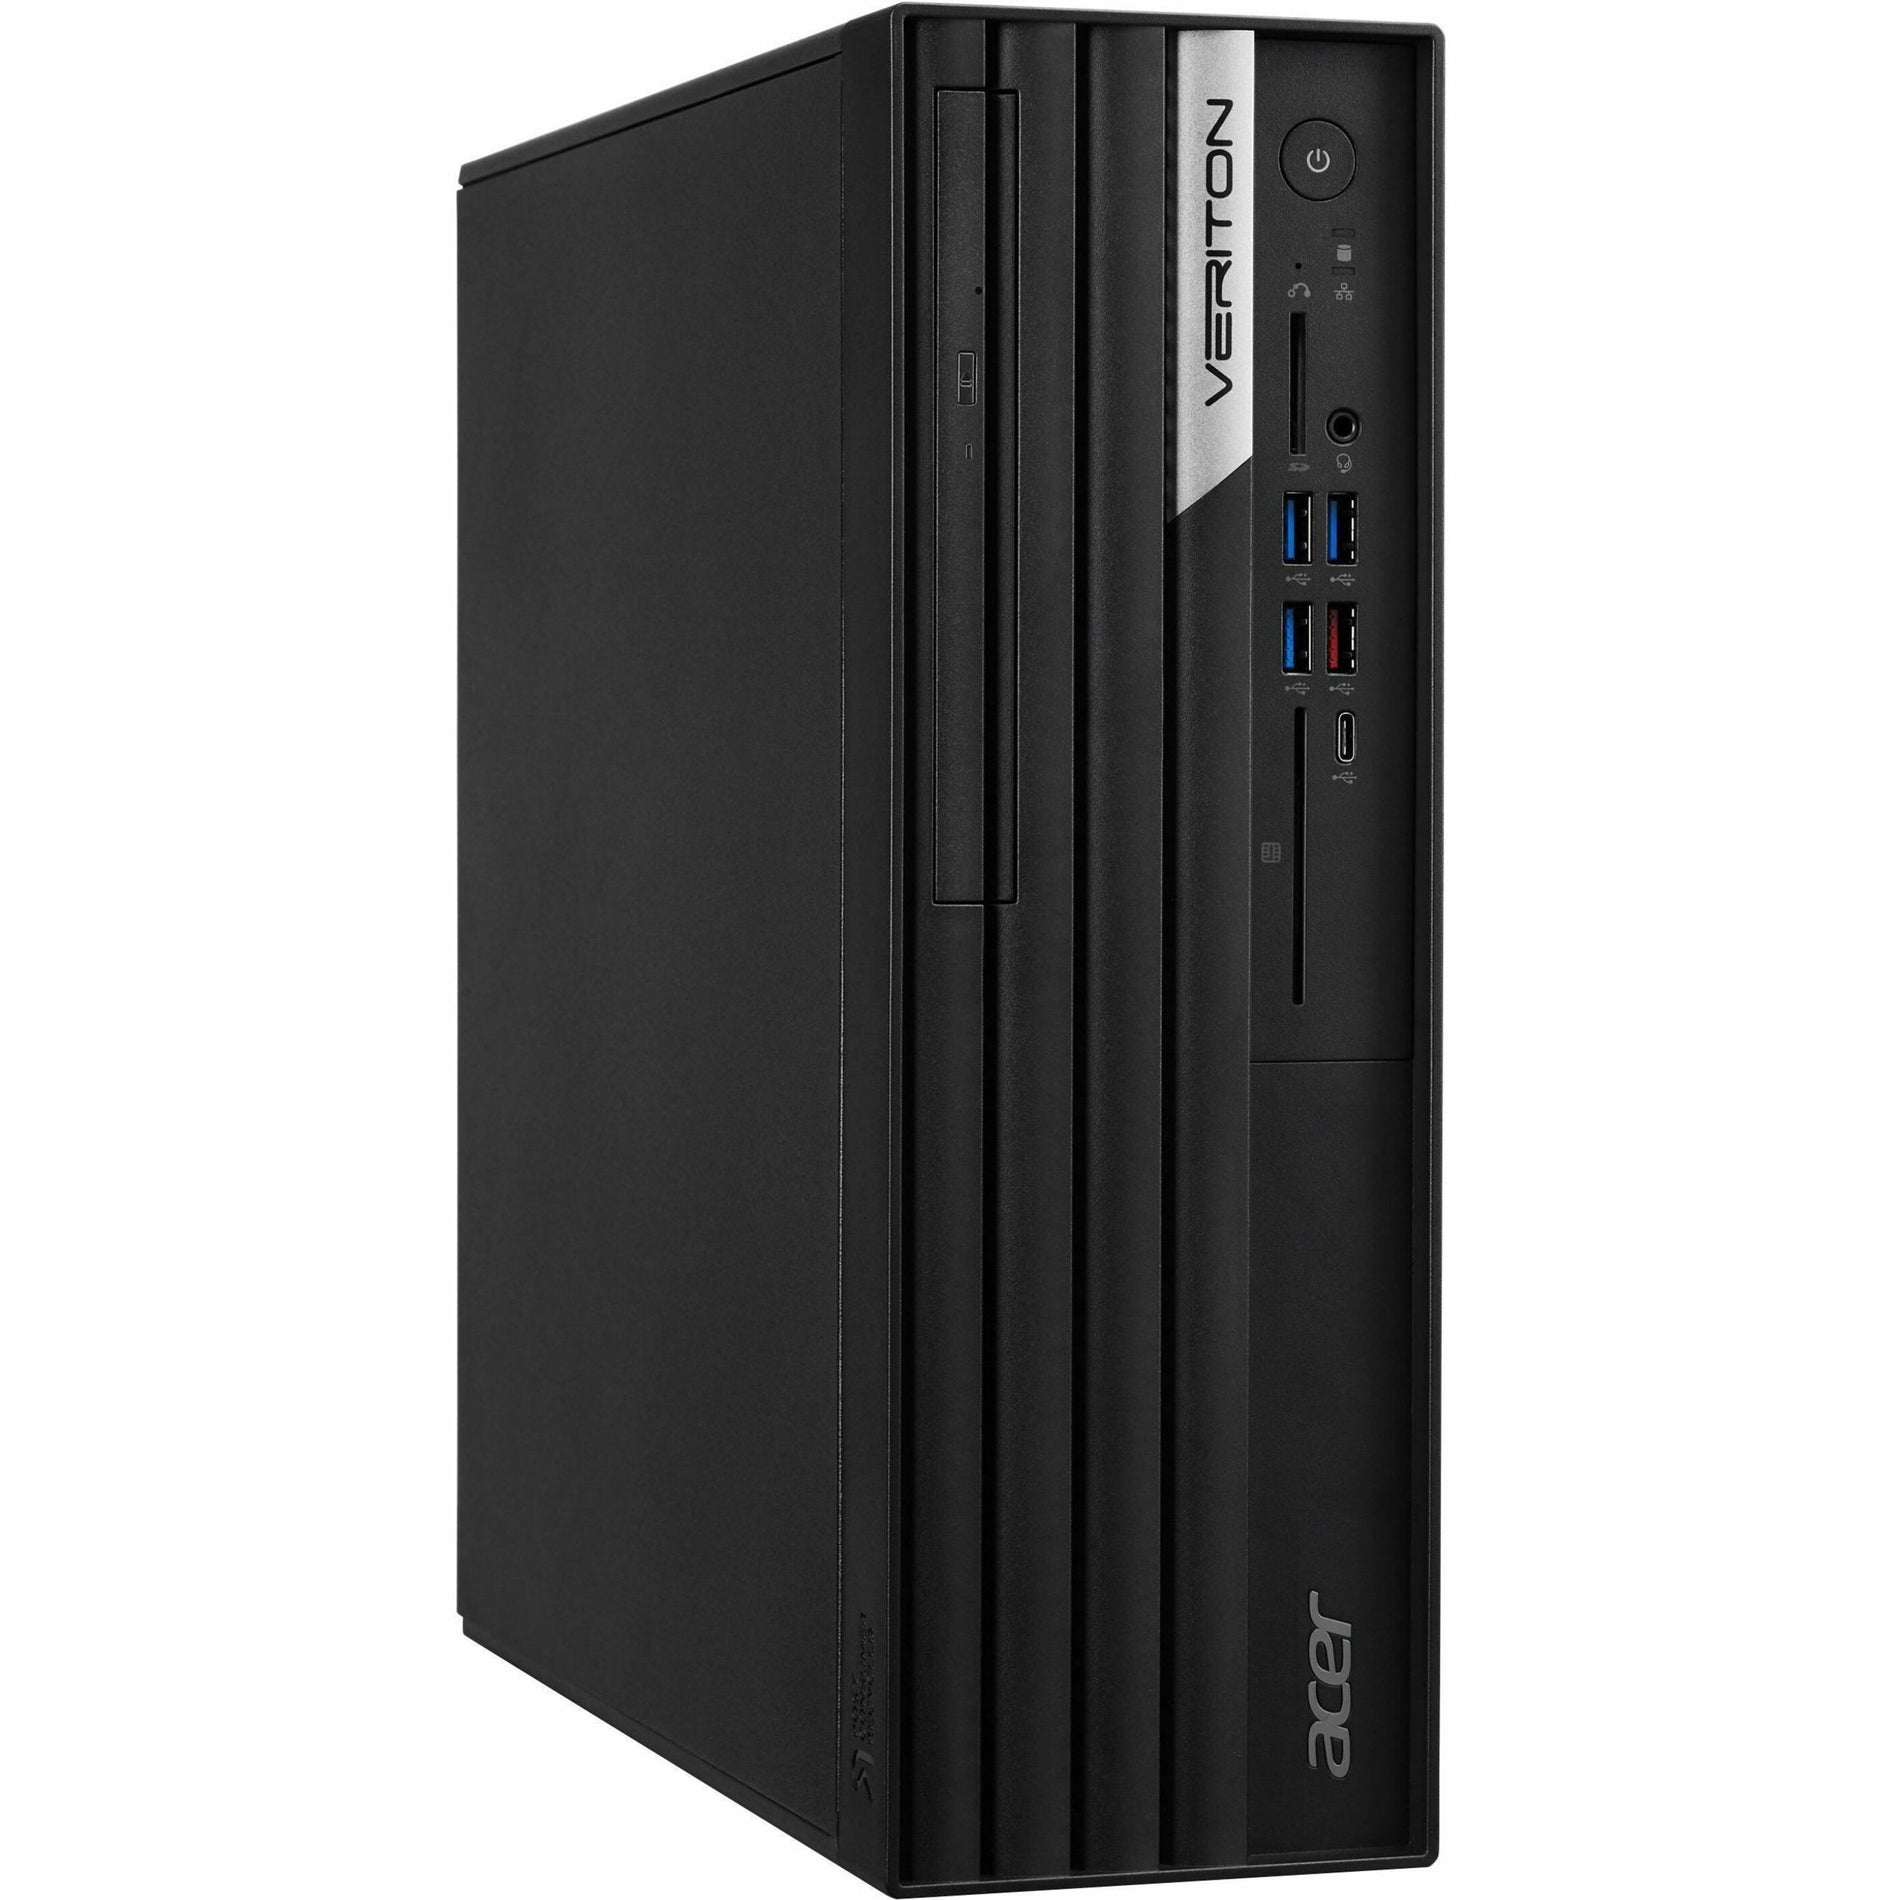 Acer Veriton VX4690G-I516G5 Desktop Computer - Core i5, 16GB RAM, 512GB SSD, Windows 10 Pro [Discontinued]